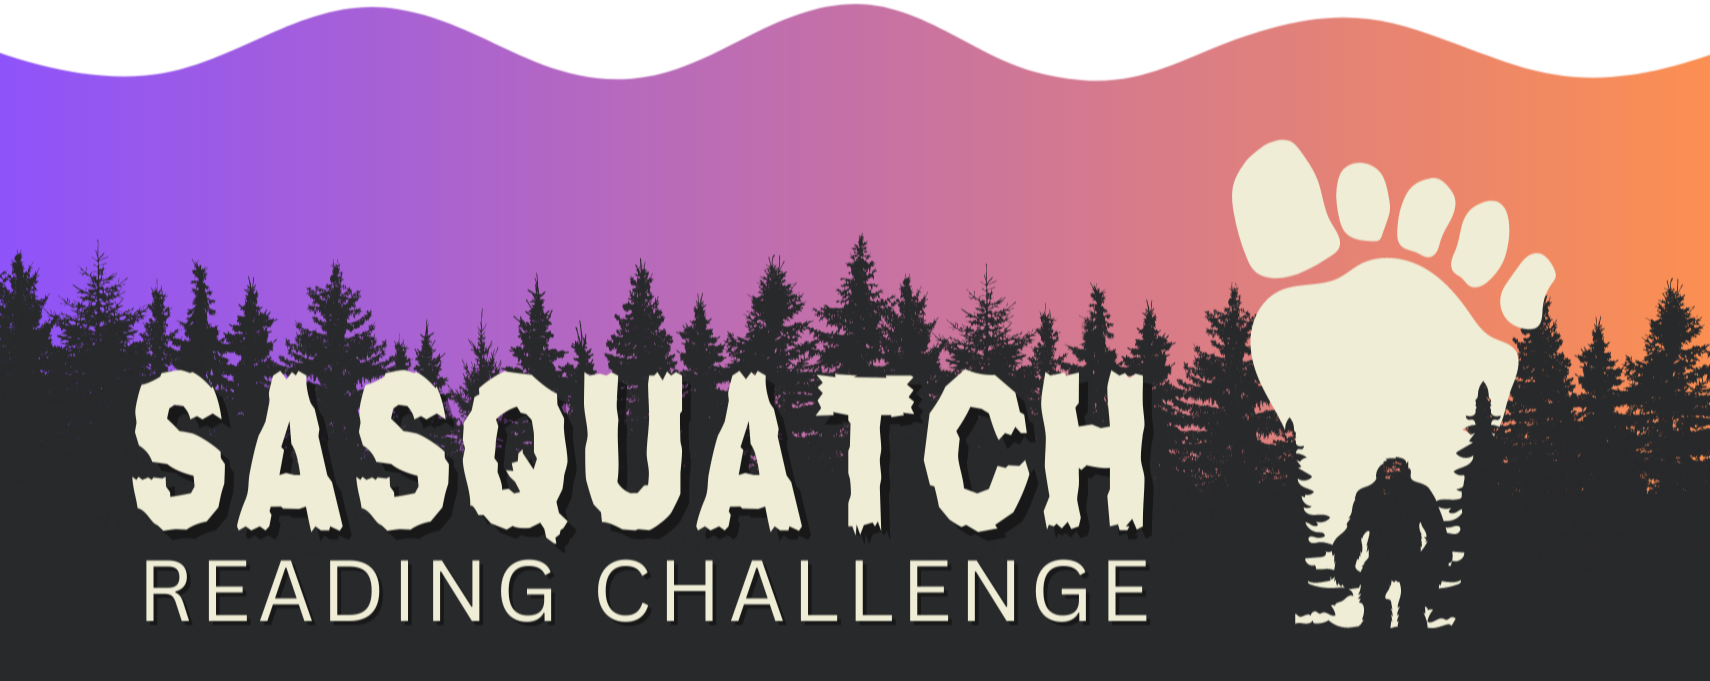 Sasquatch Reading Challenge, Green Pine Trees, Sasquatch, Footprint